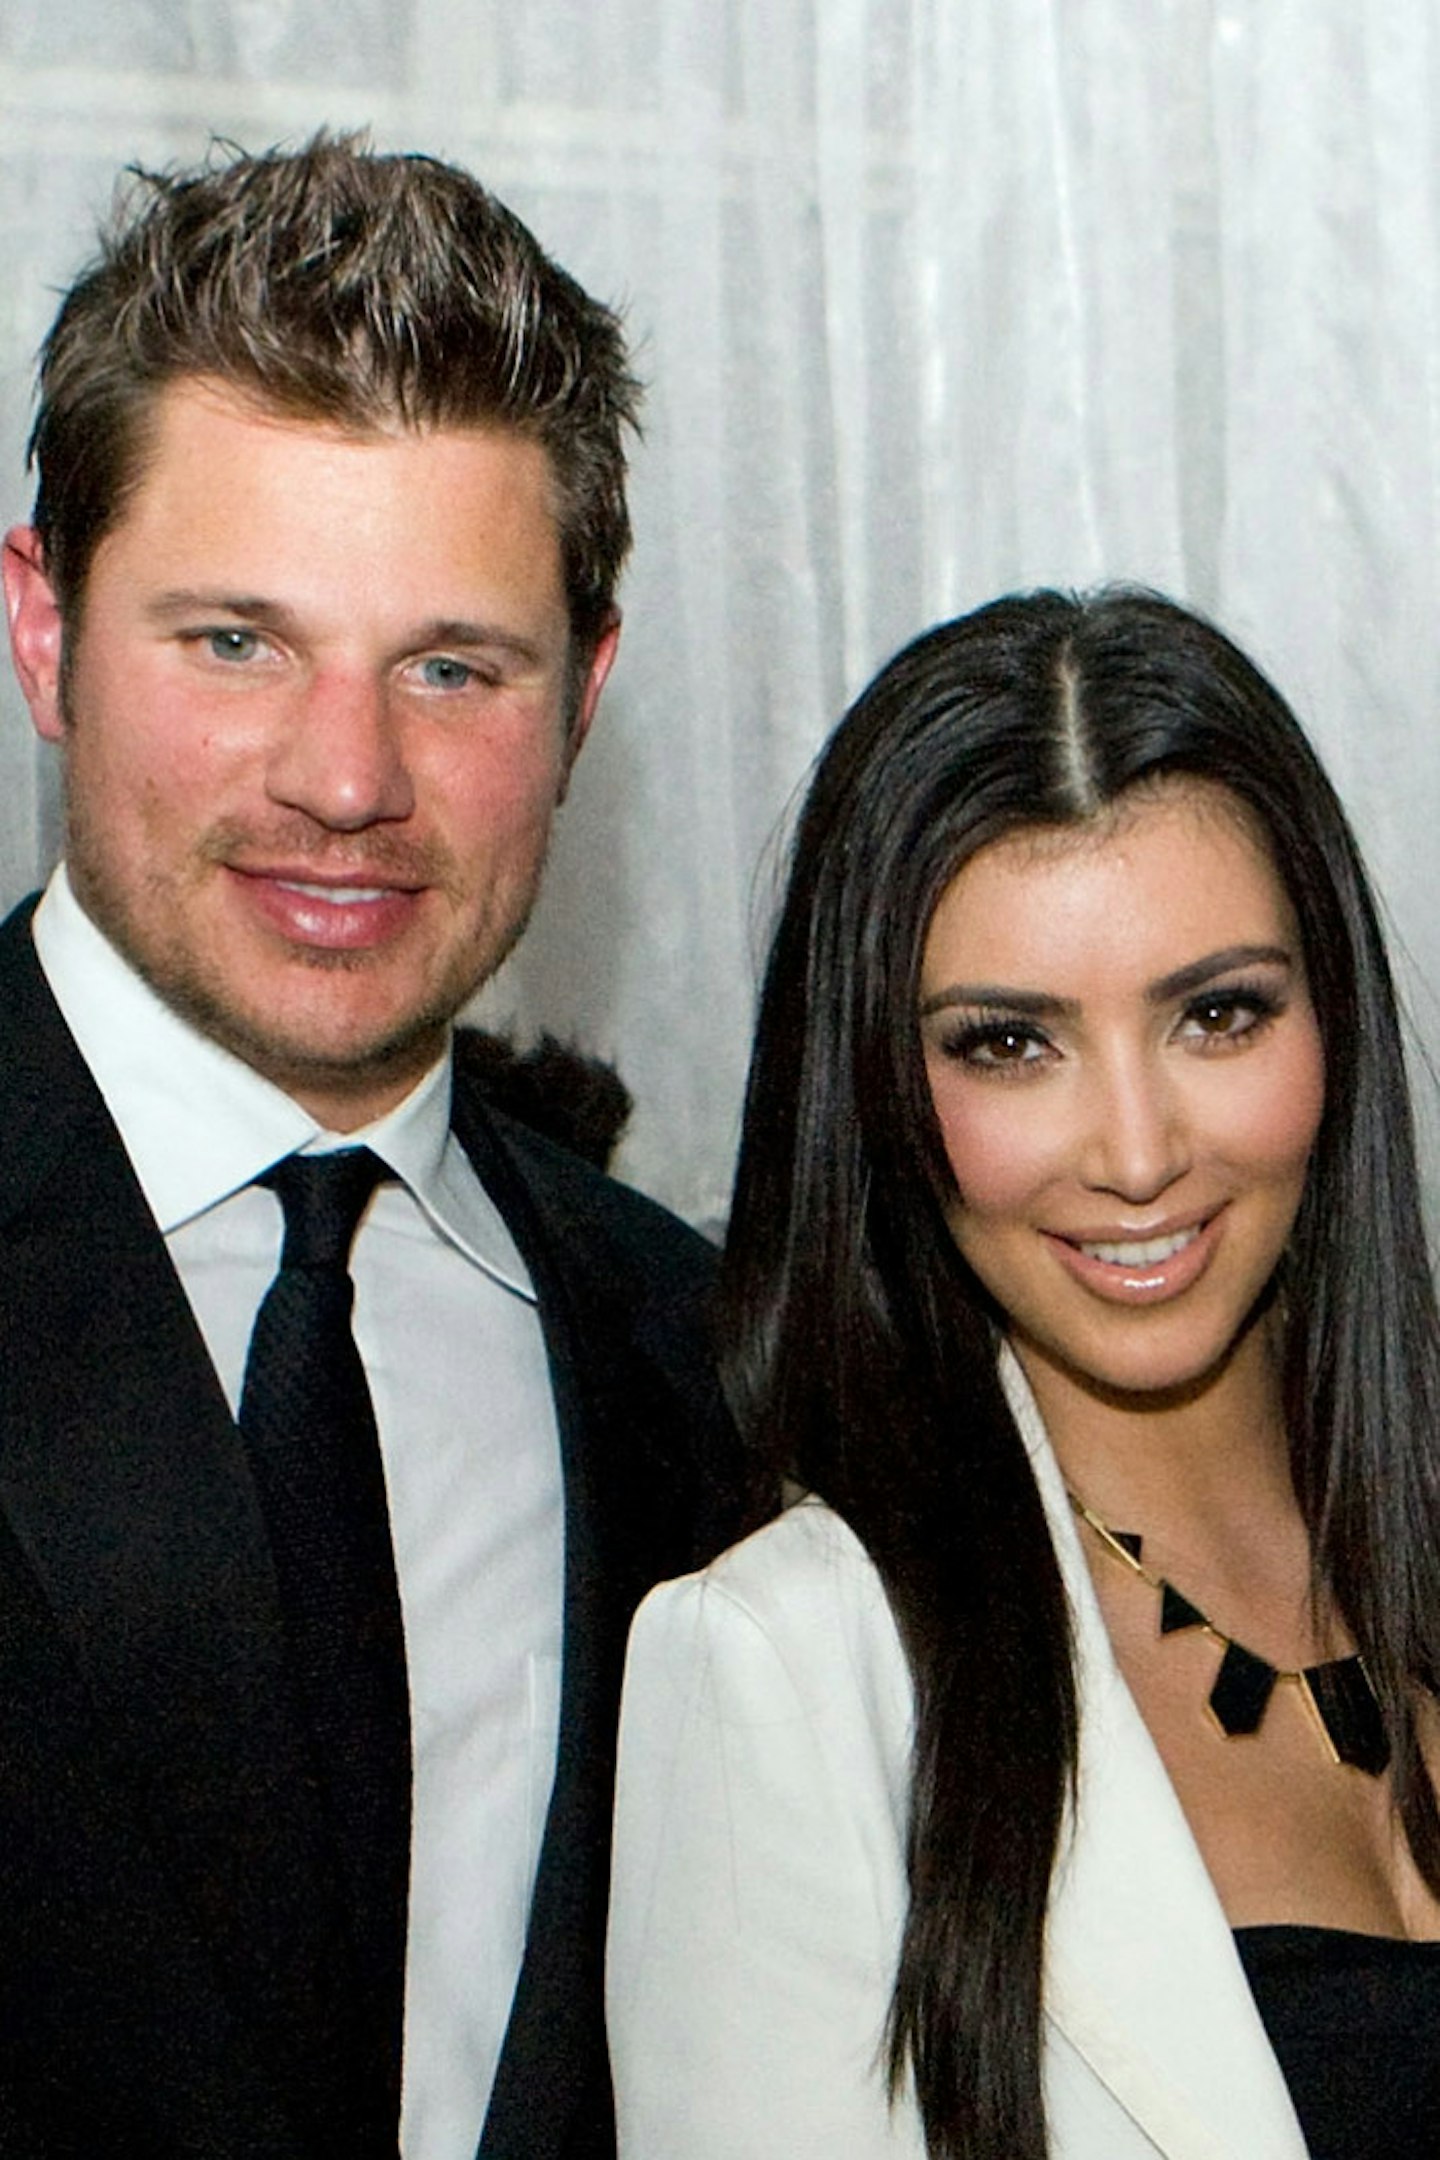 Kim Kardashian and Nick Lachey